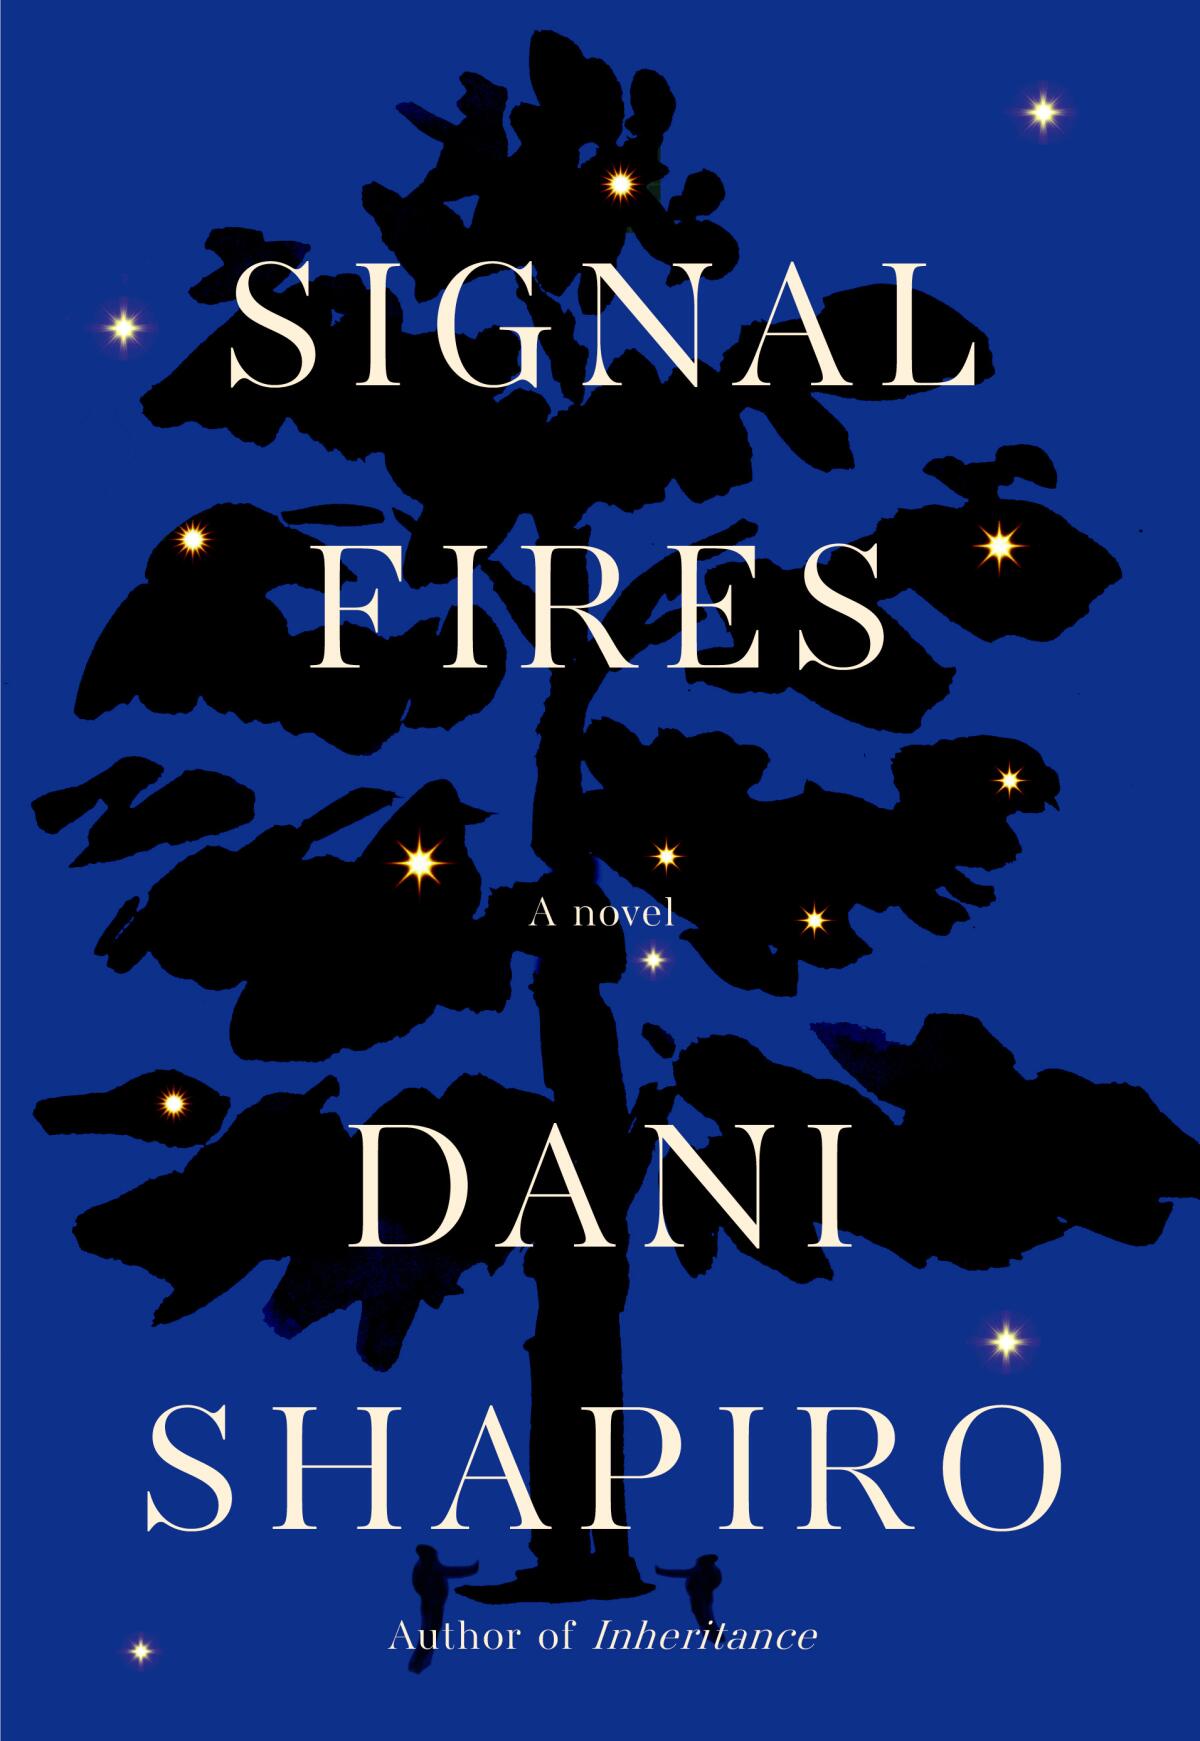 "Signal Fires: A Novel" by Dani Shapiro